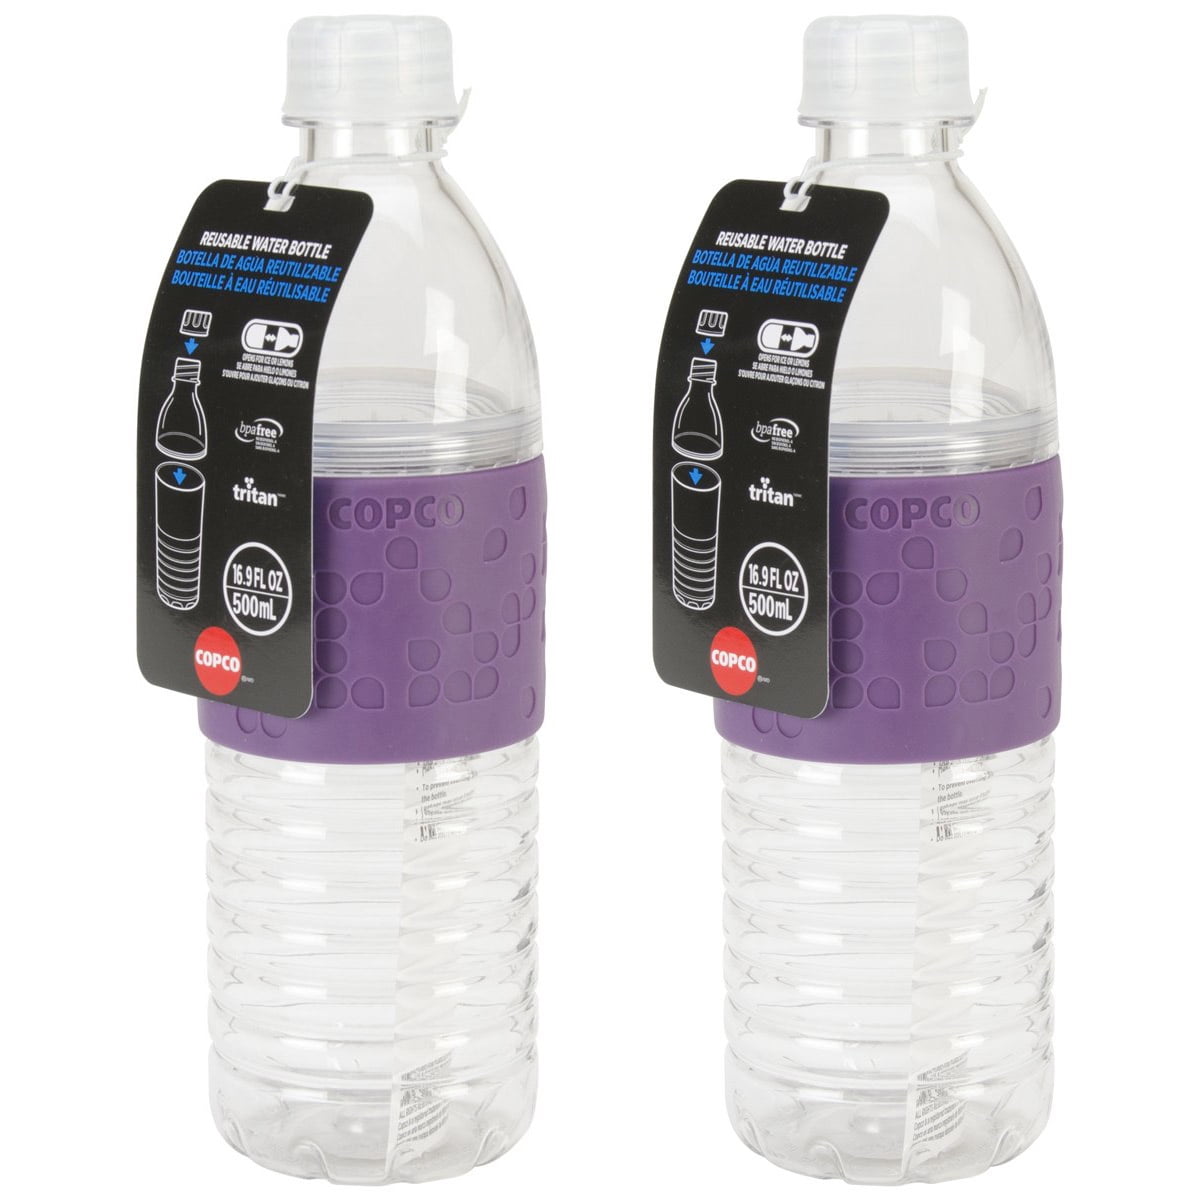 7 Pack (16.9 FL. OZ.) Wc Water Bottles – WC Water Bottles